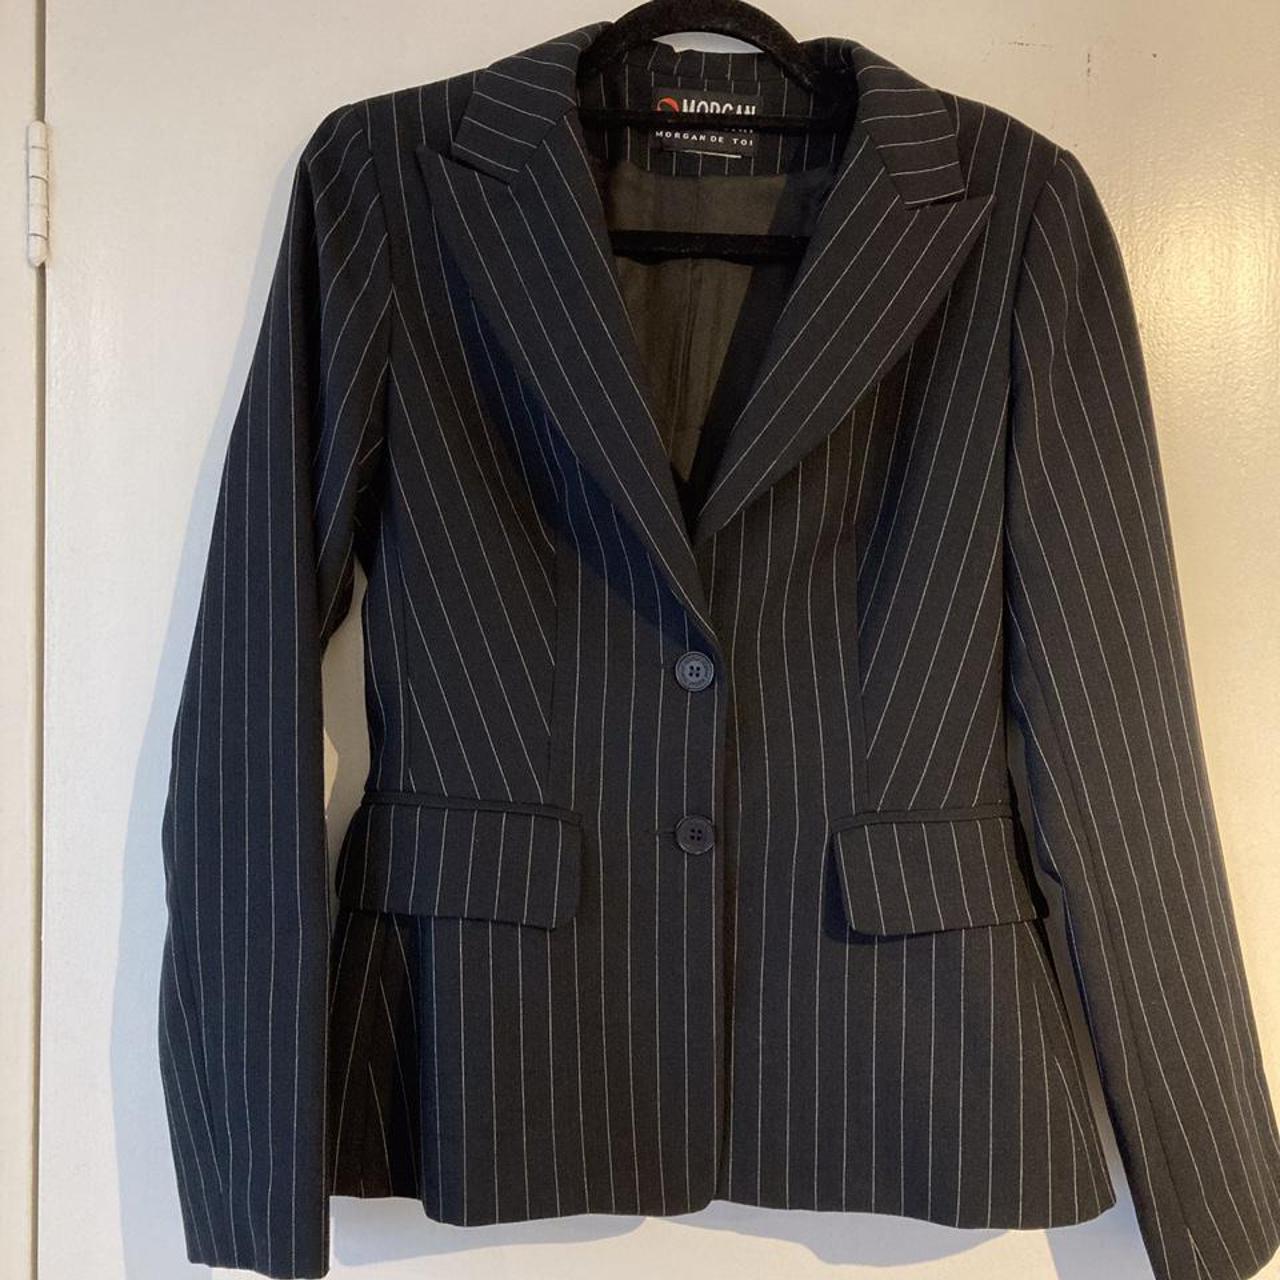 Vintage Morgan De Toi pinstripe black blazer. Size... - Depop